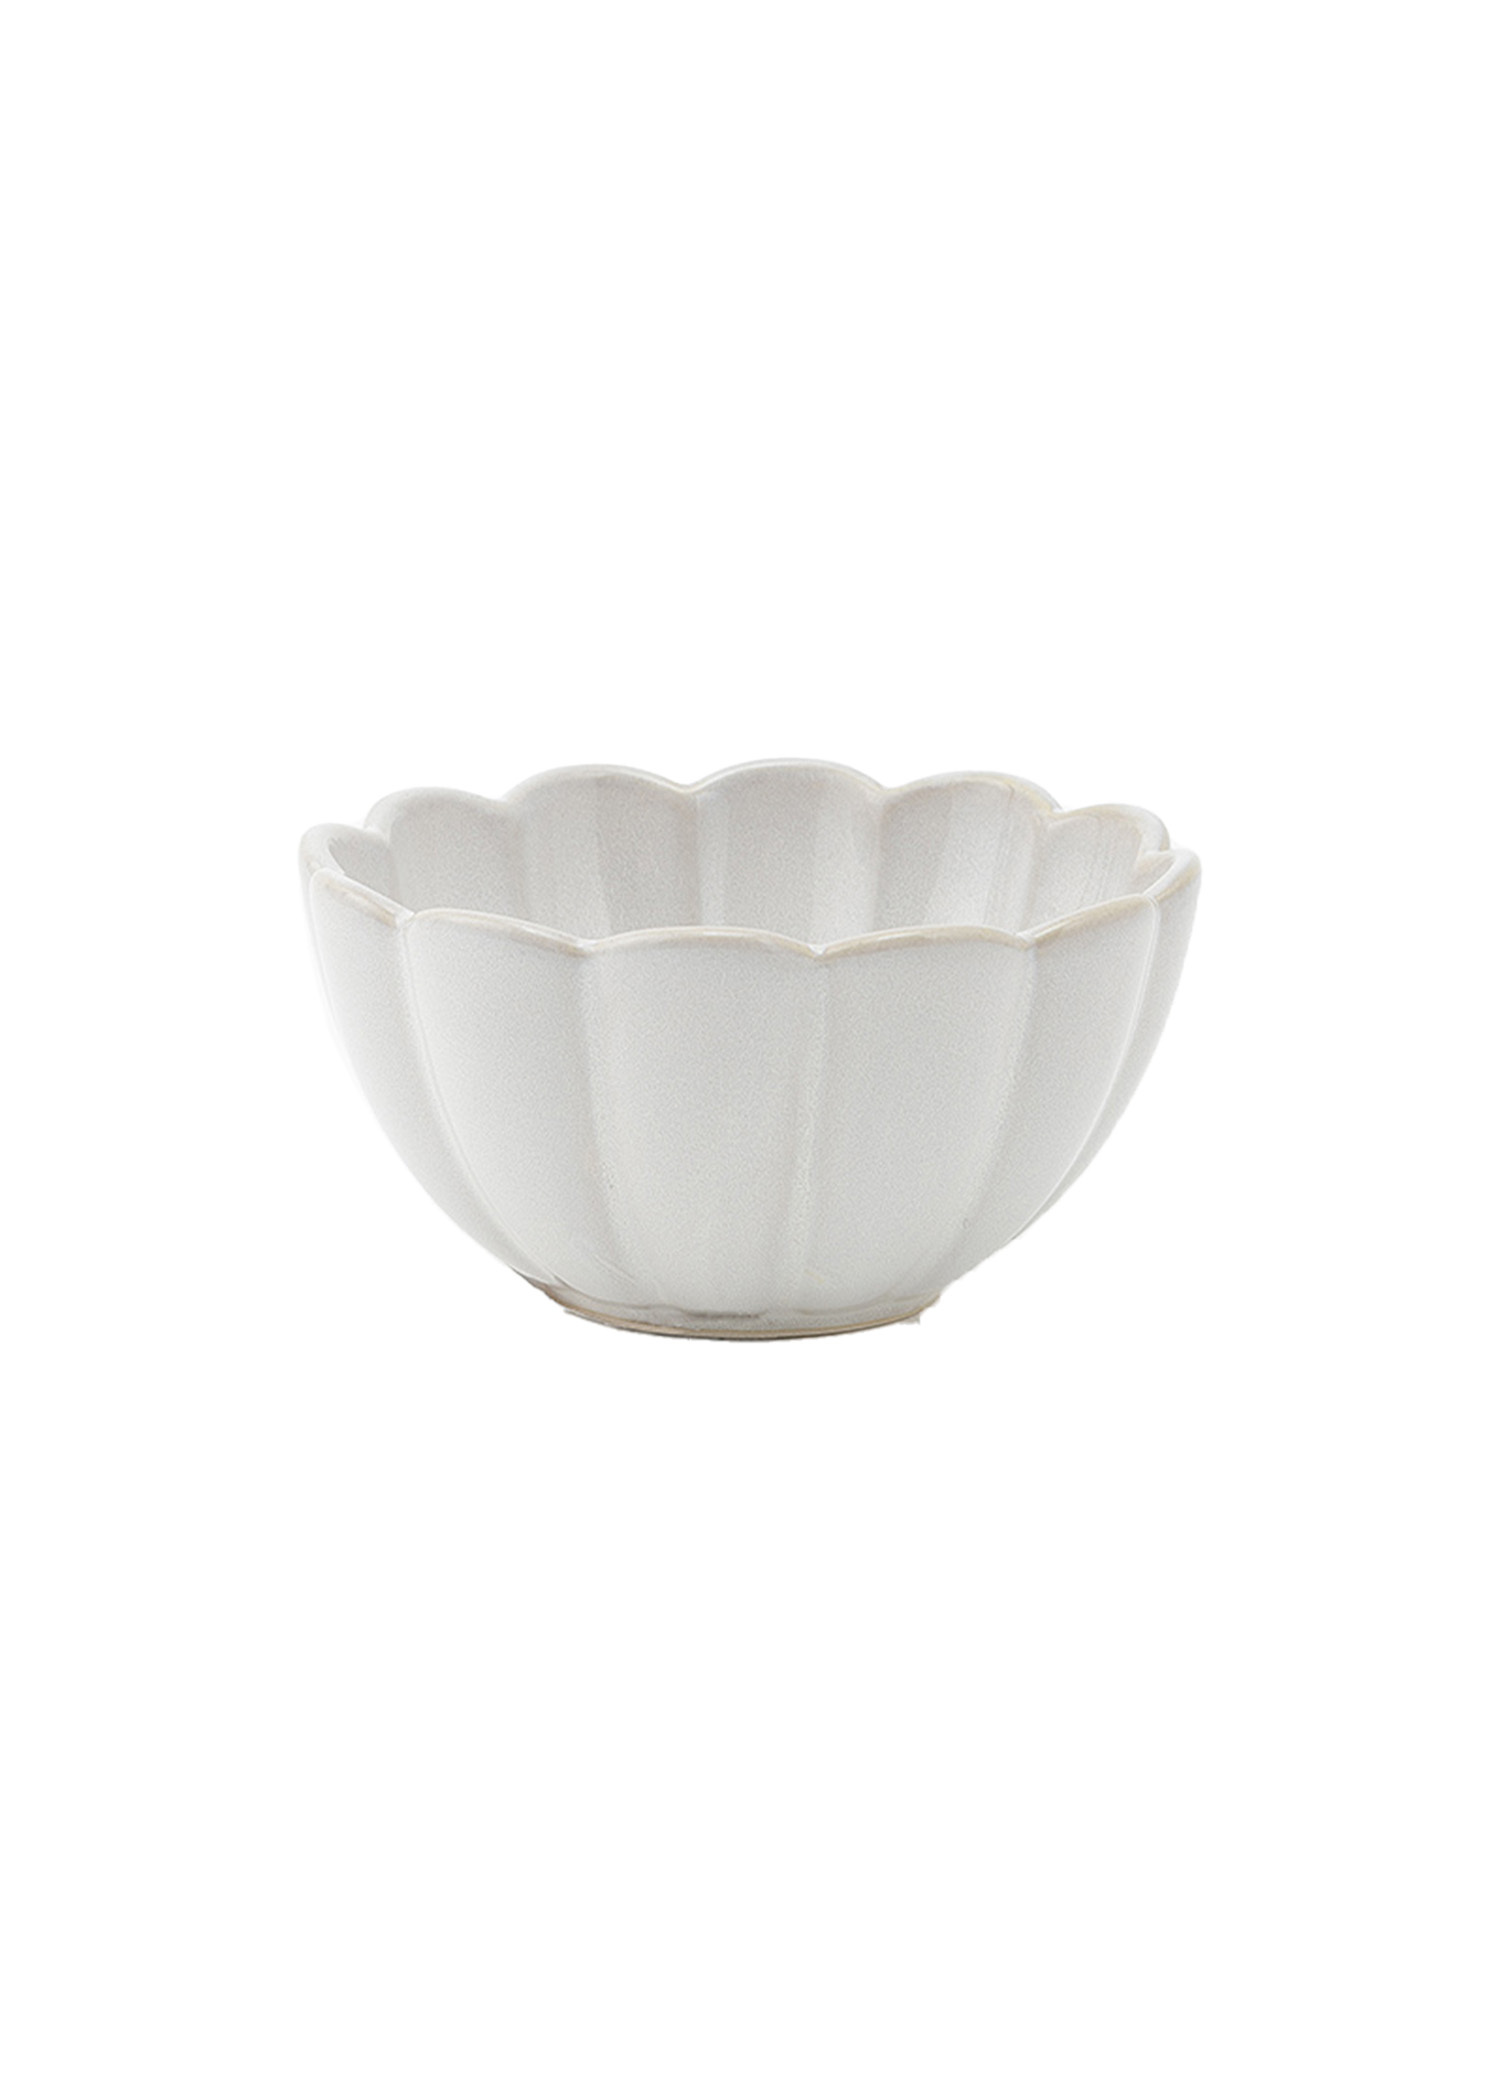 White stoneware bowl Image 0